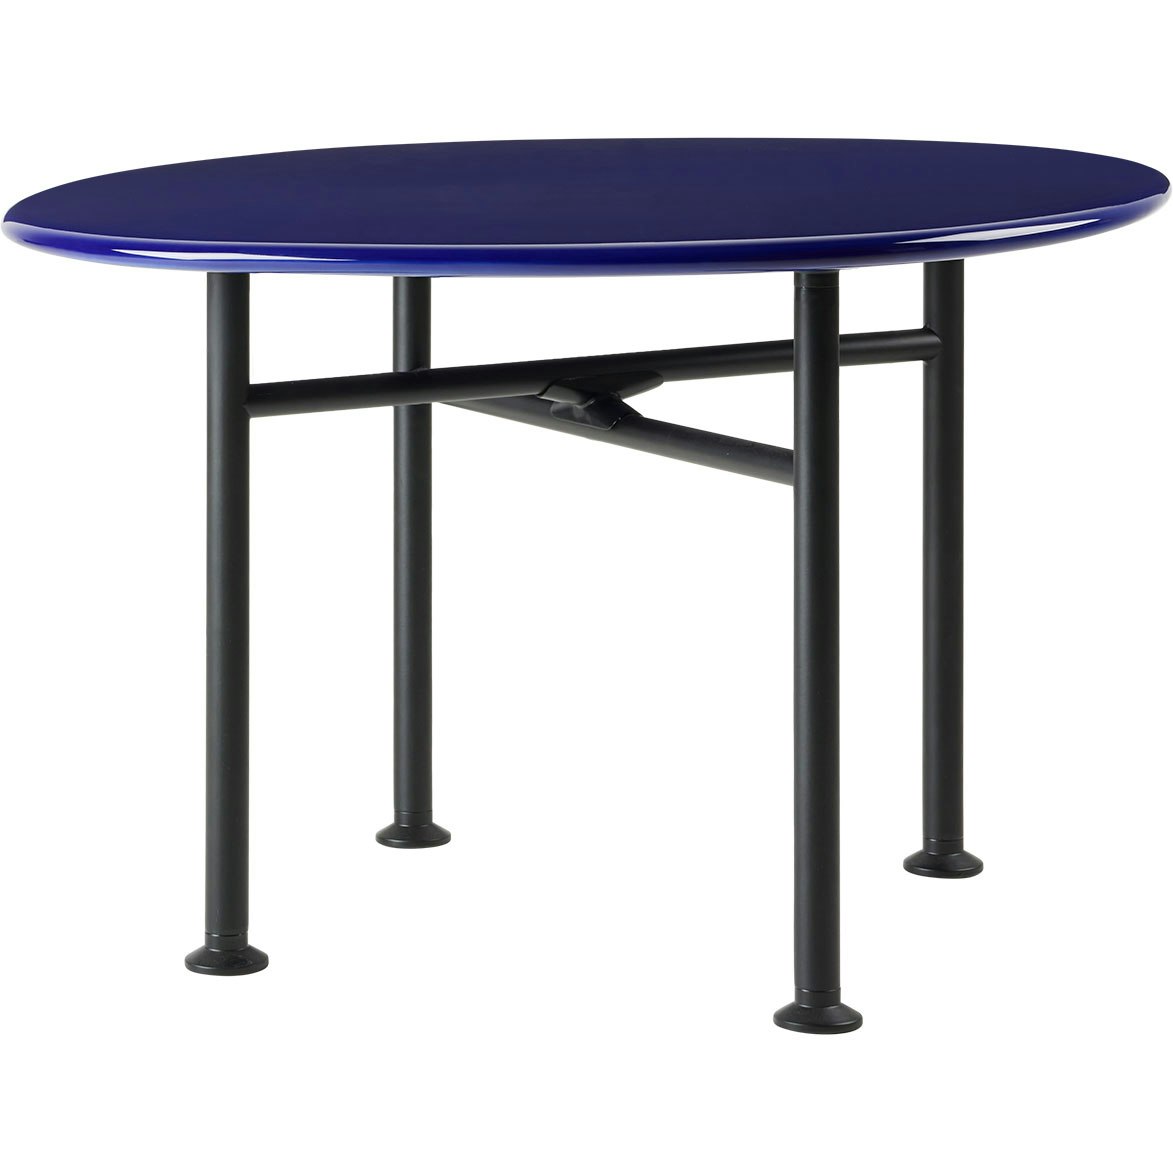 Carmel Coffee Table 60x60 cm, Pacific Blue